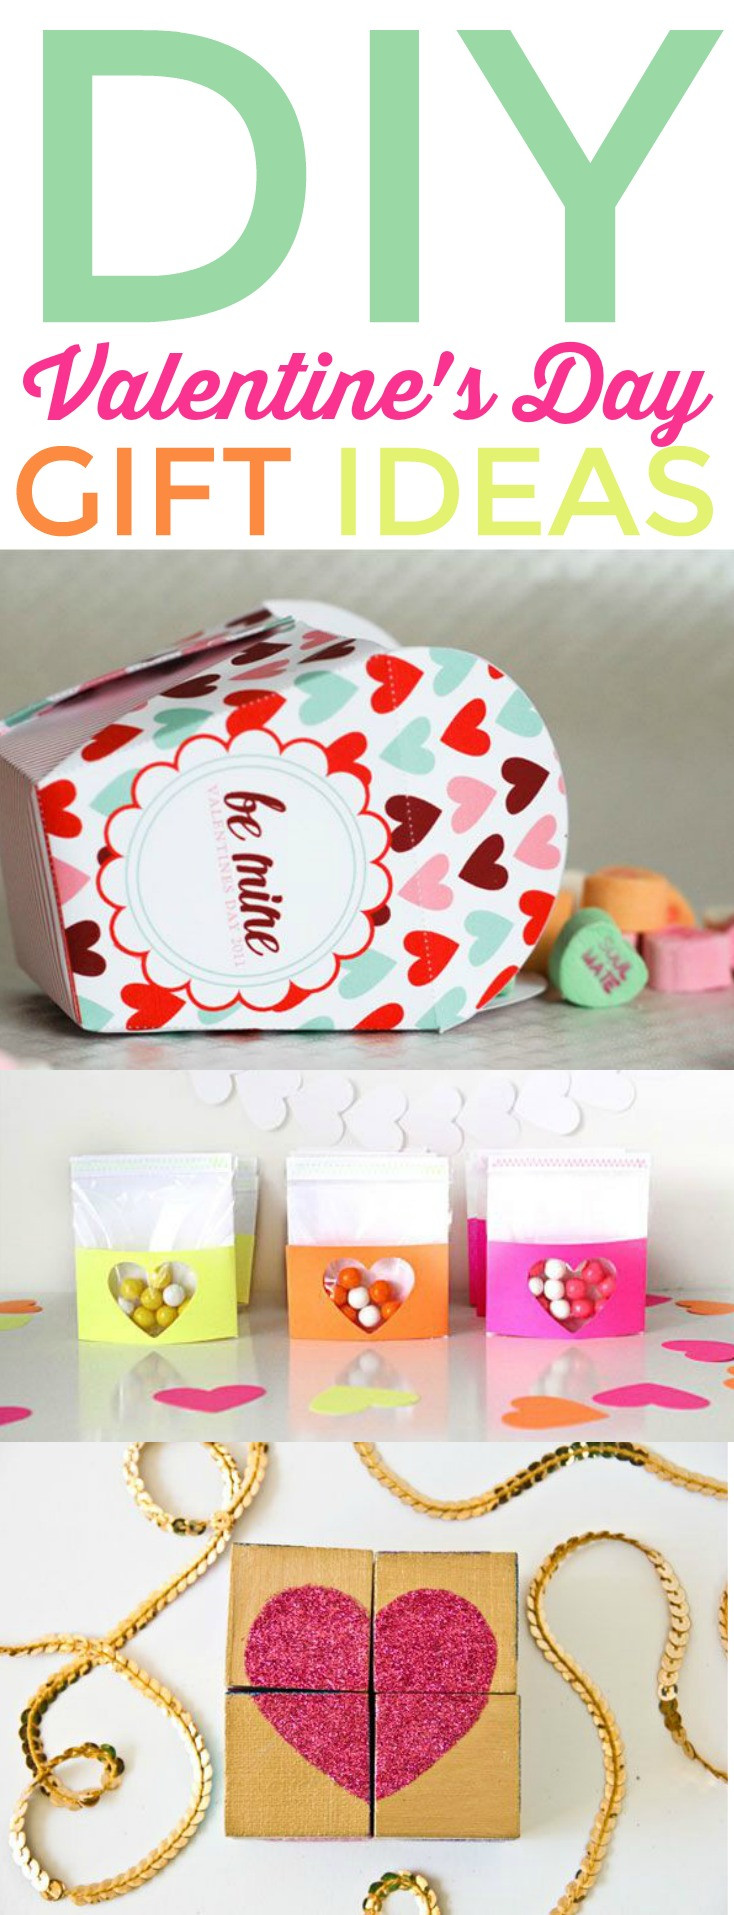 Valentine Craft Gift Ideas
 DIY Valentines Day Gift Ideas A Little Craft In Your Day